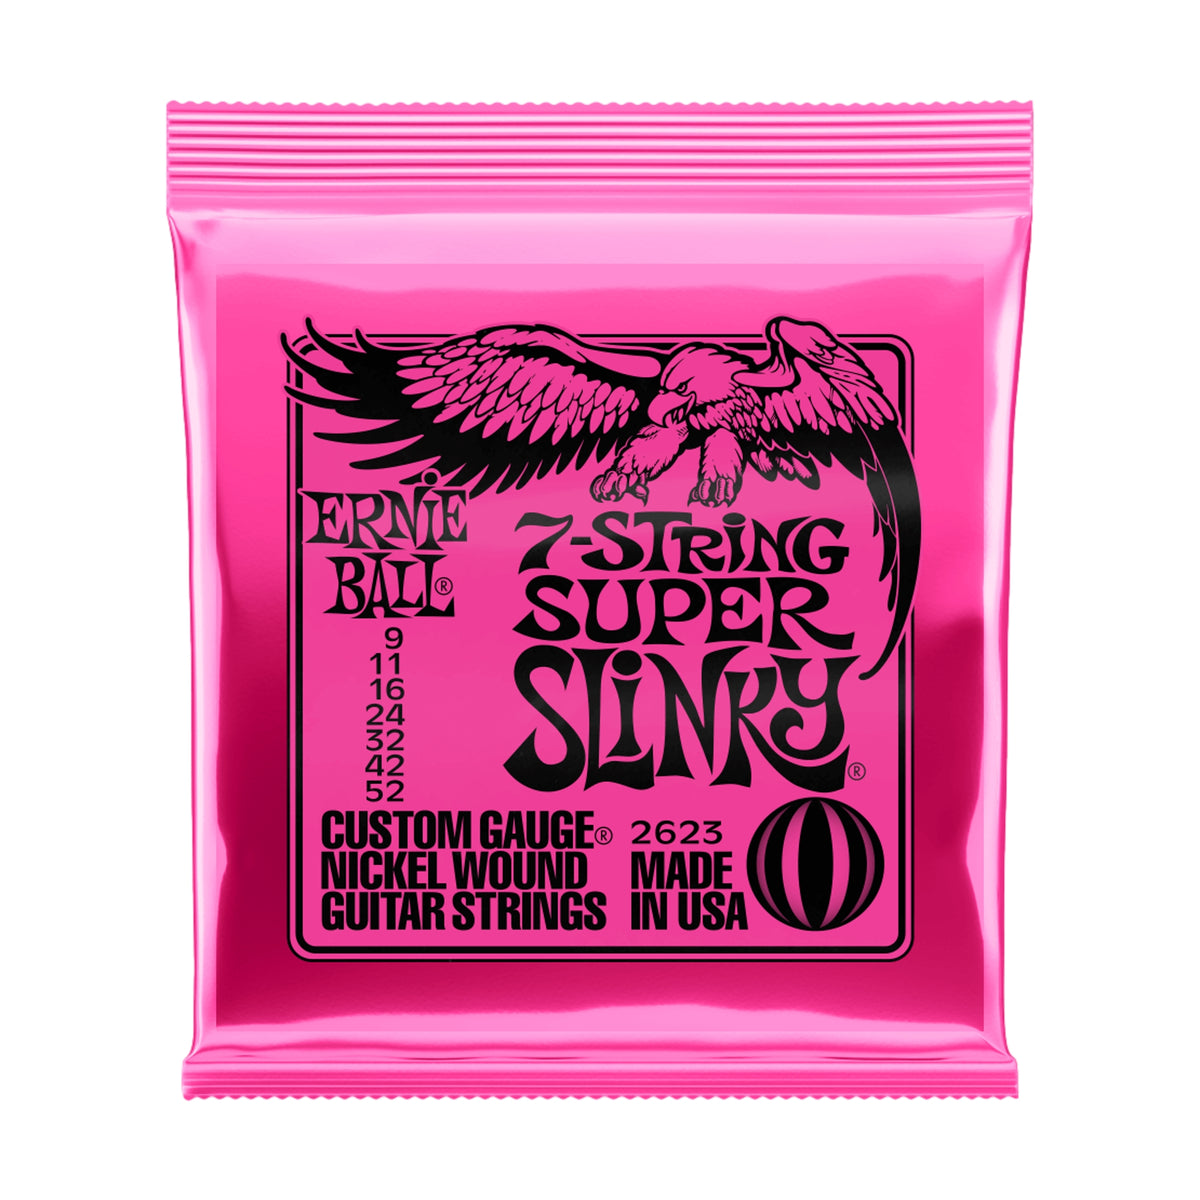 Ernie Ball Super Slinky 7-String Nickel Wound Electric Guitar Strings 9-52